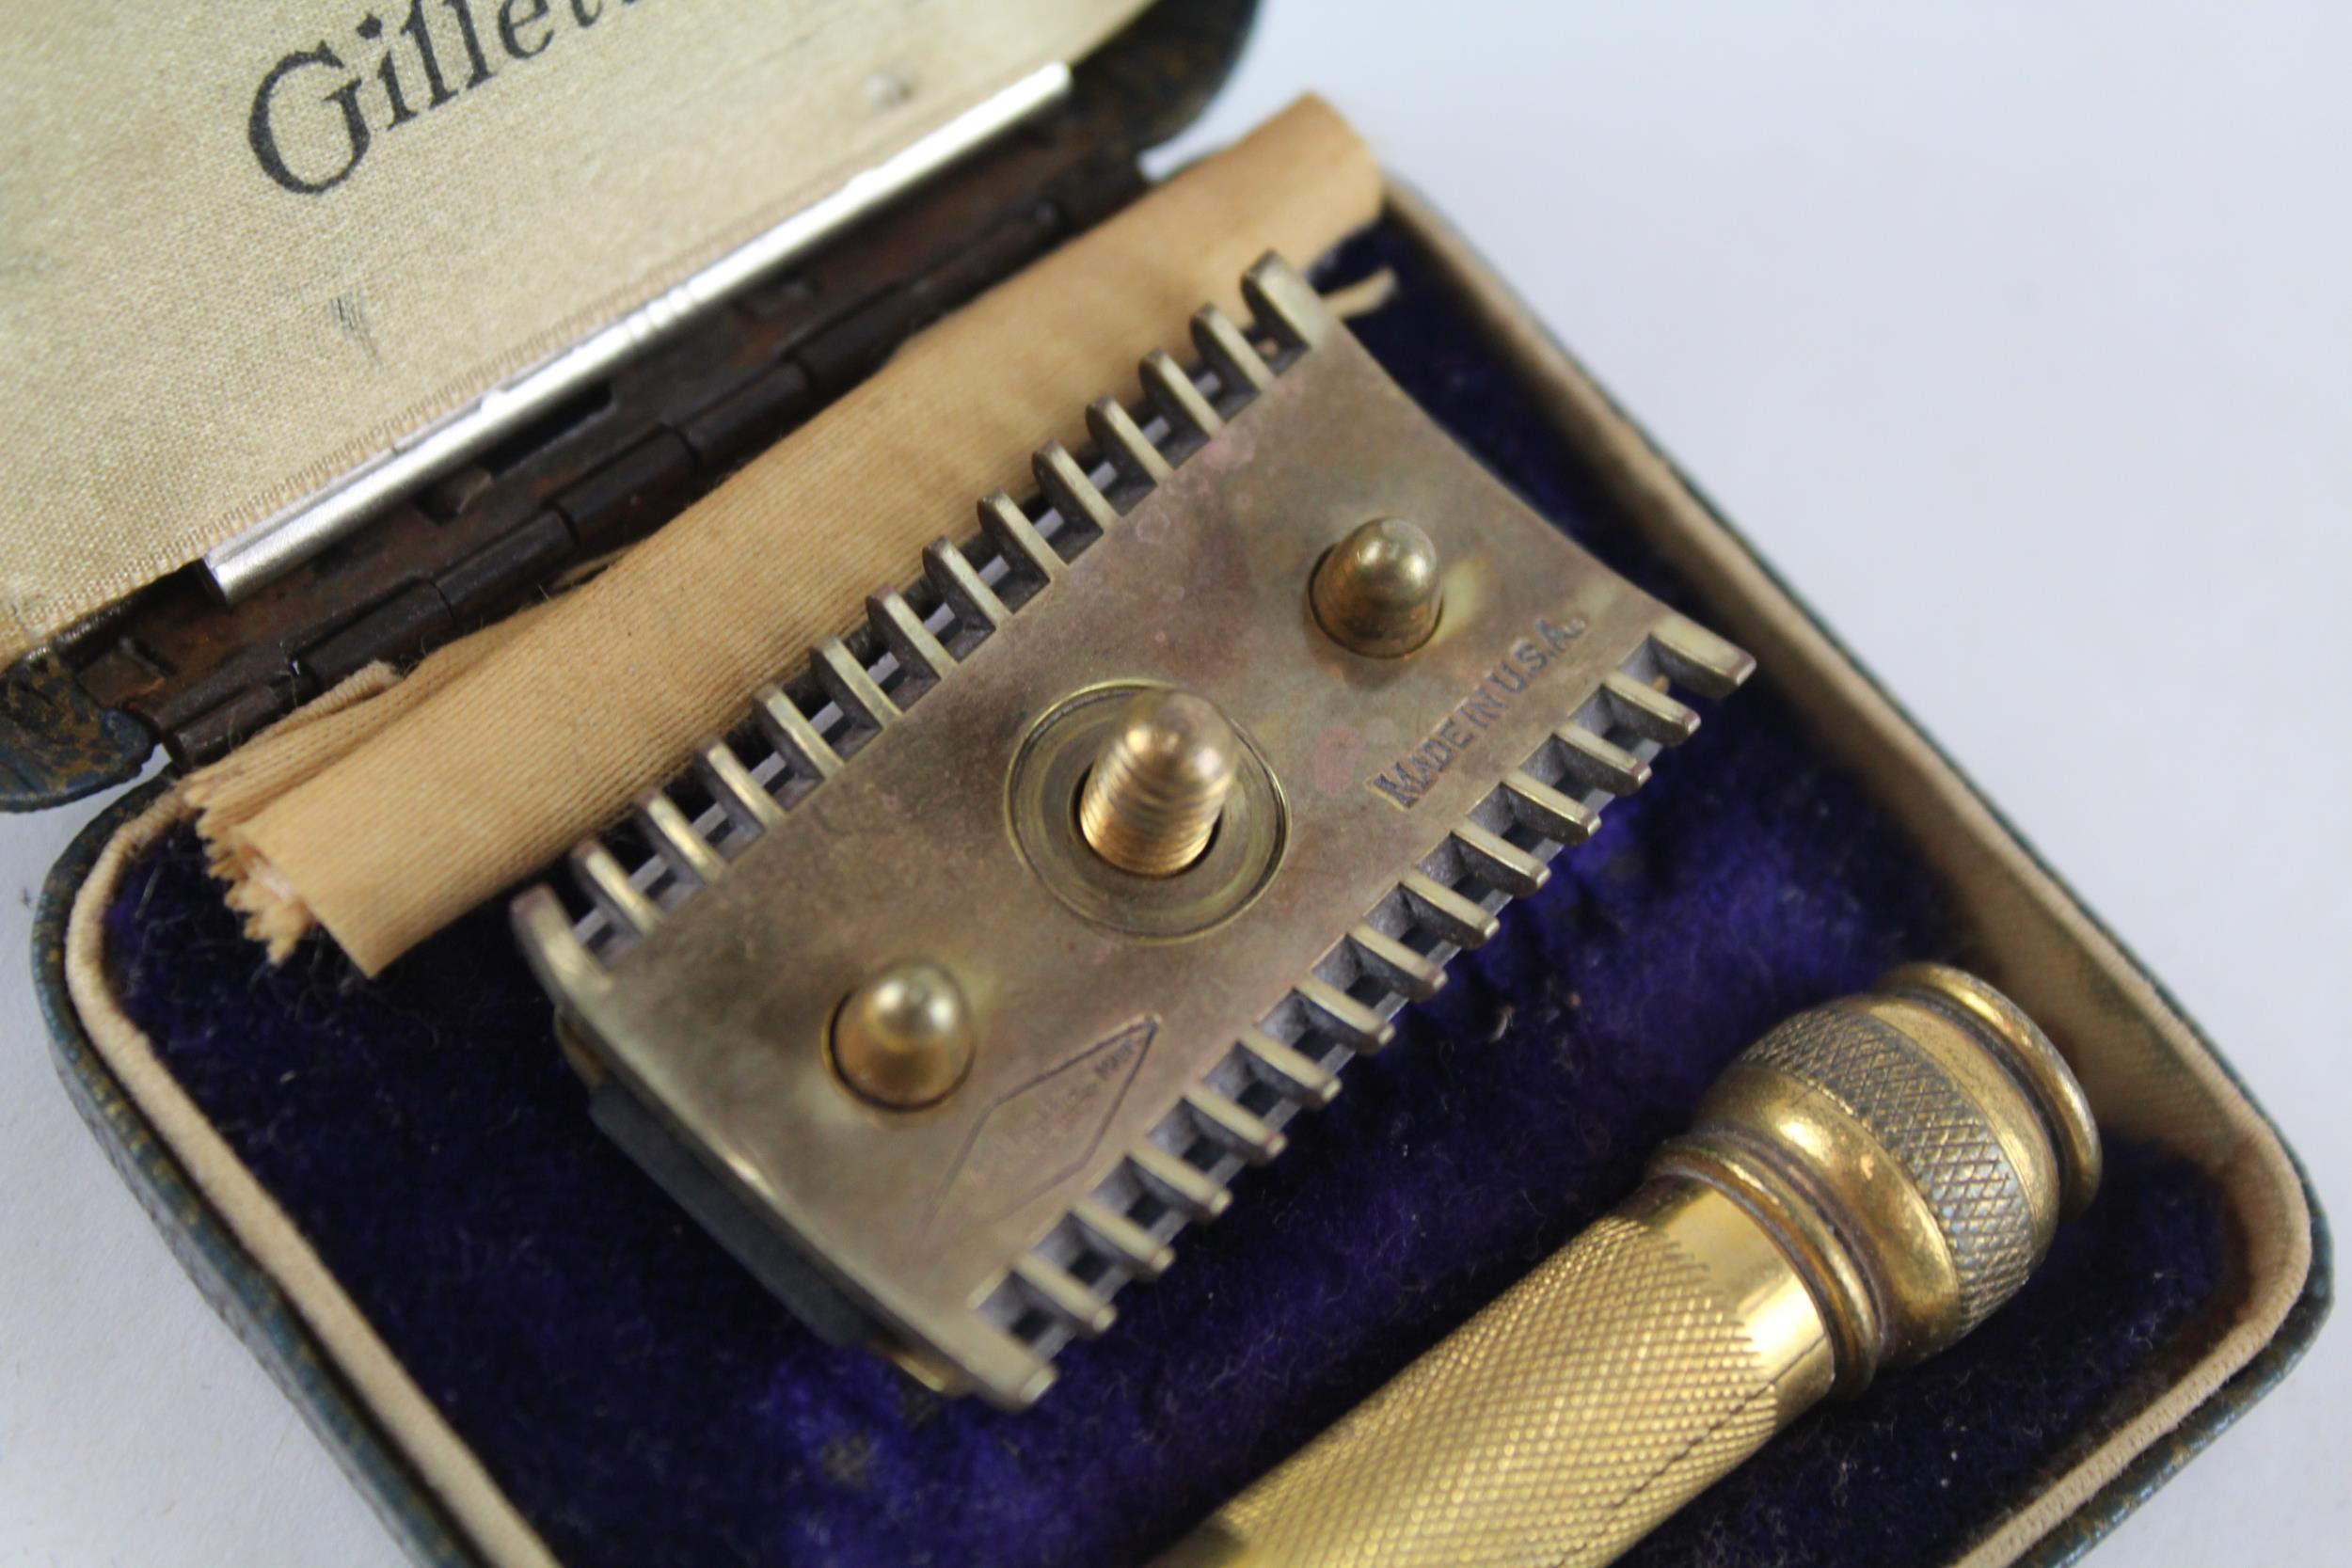 Gillette Vintage Travel Safety Razor Gold Tone in Original Case // Items in vintage condition - Image 4 of 5